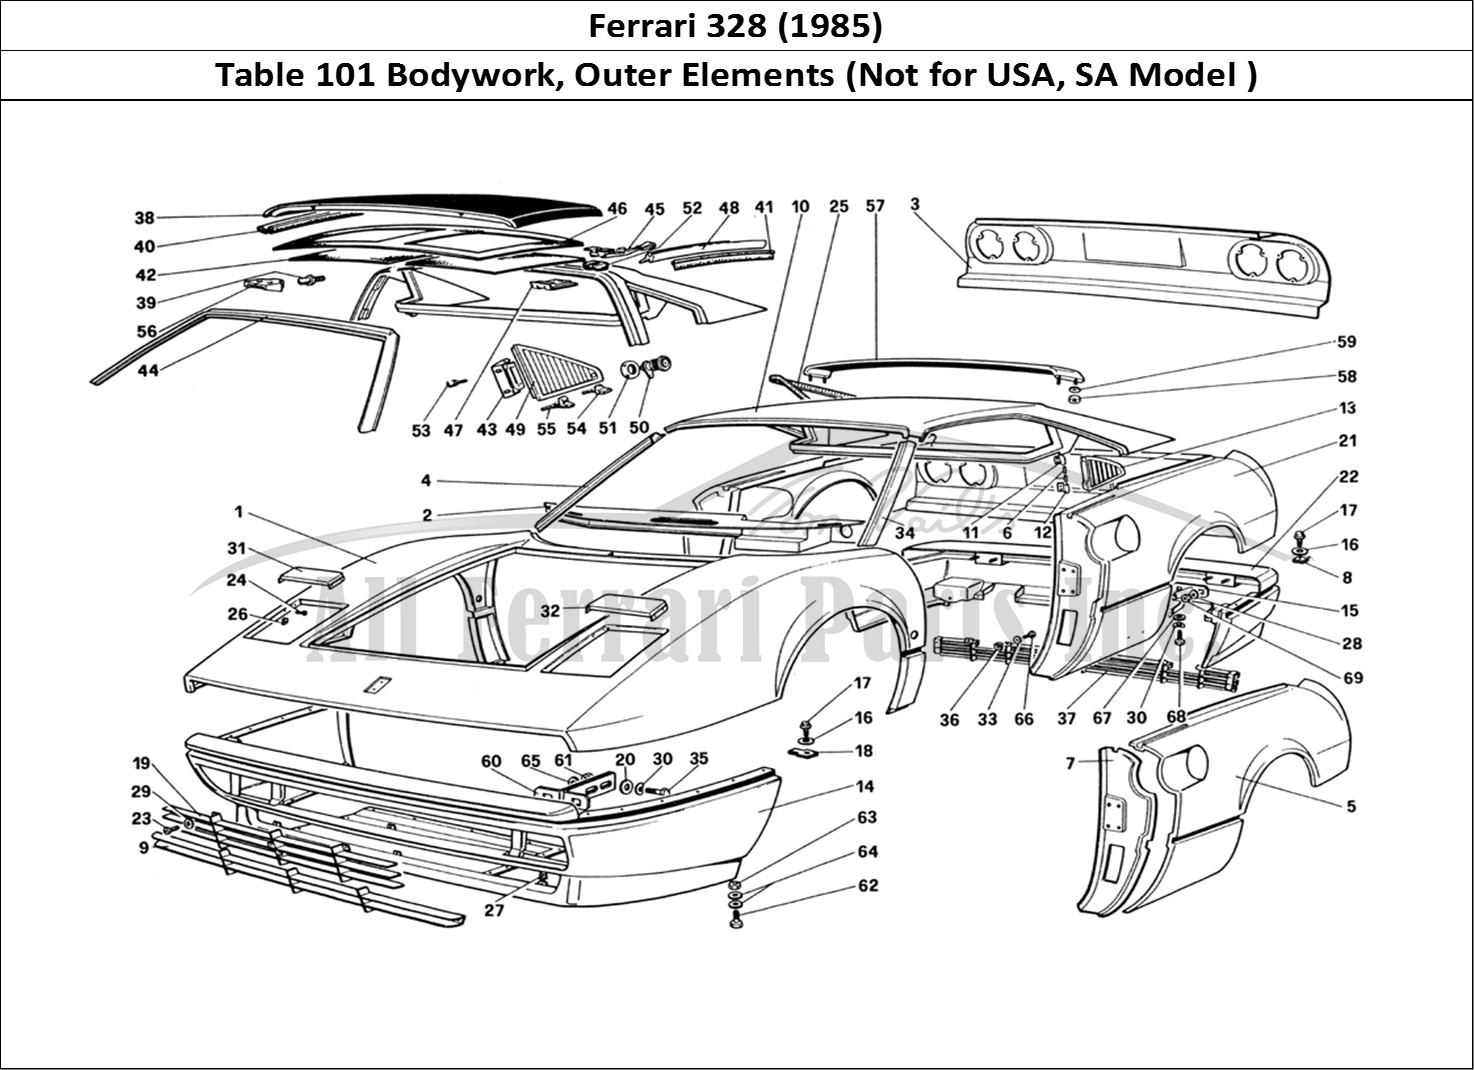 Ferrari Parts Ferrari 328 (1985) Page 101 Body Shell - Outer Elemen